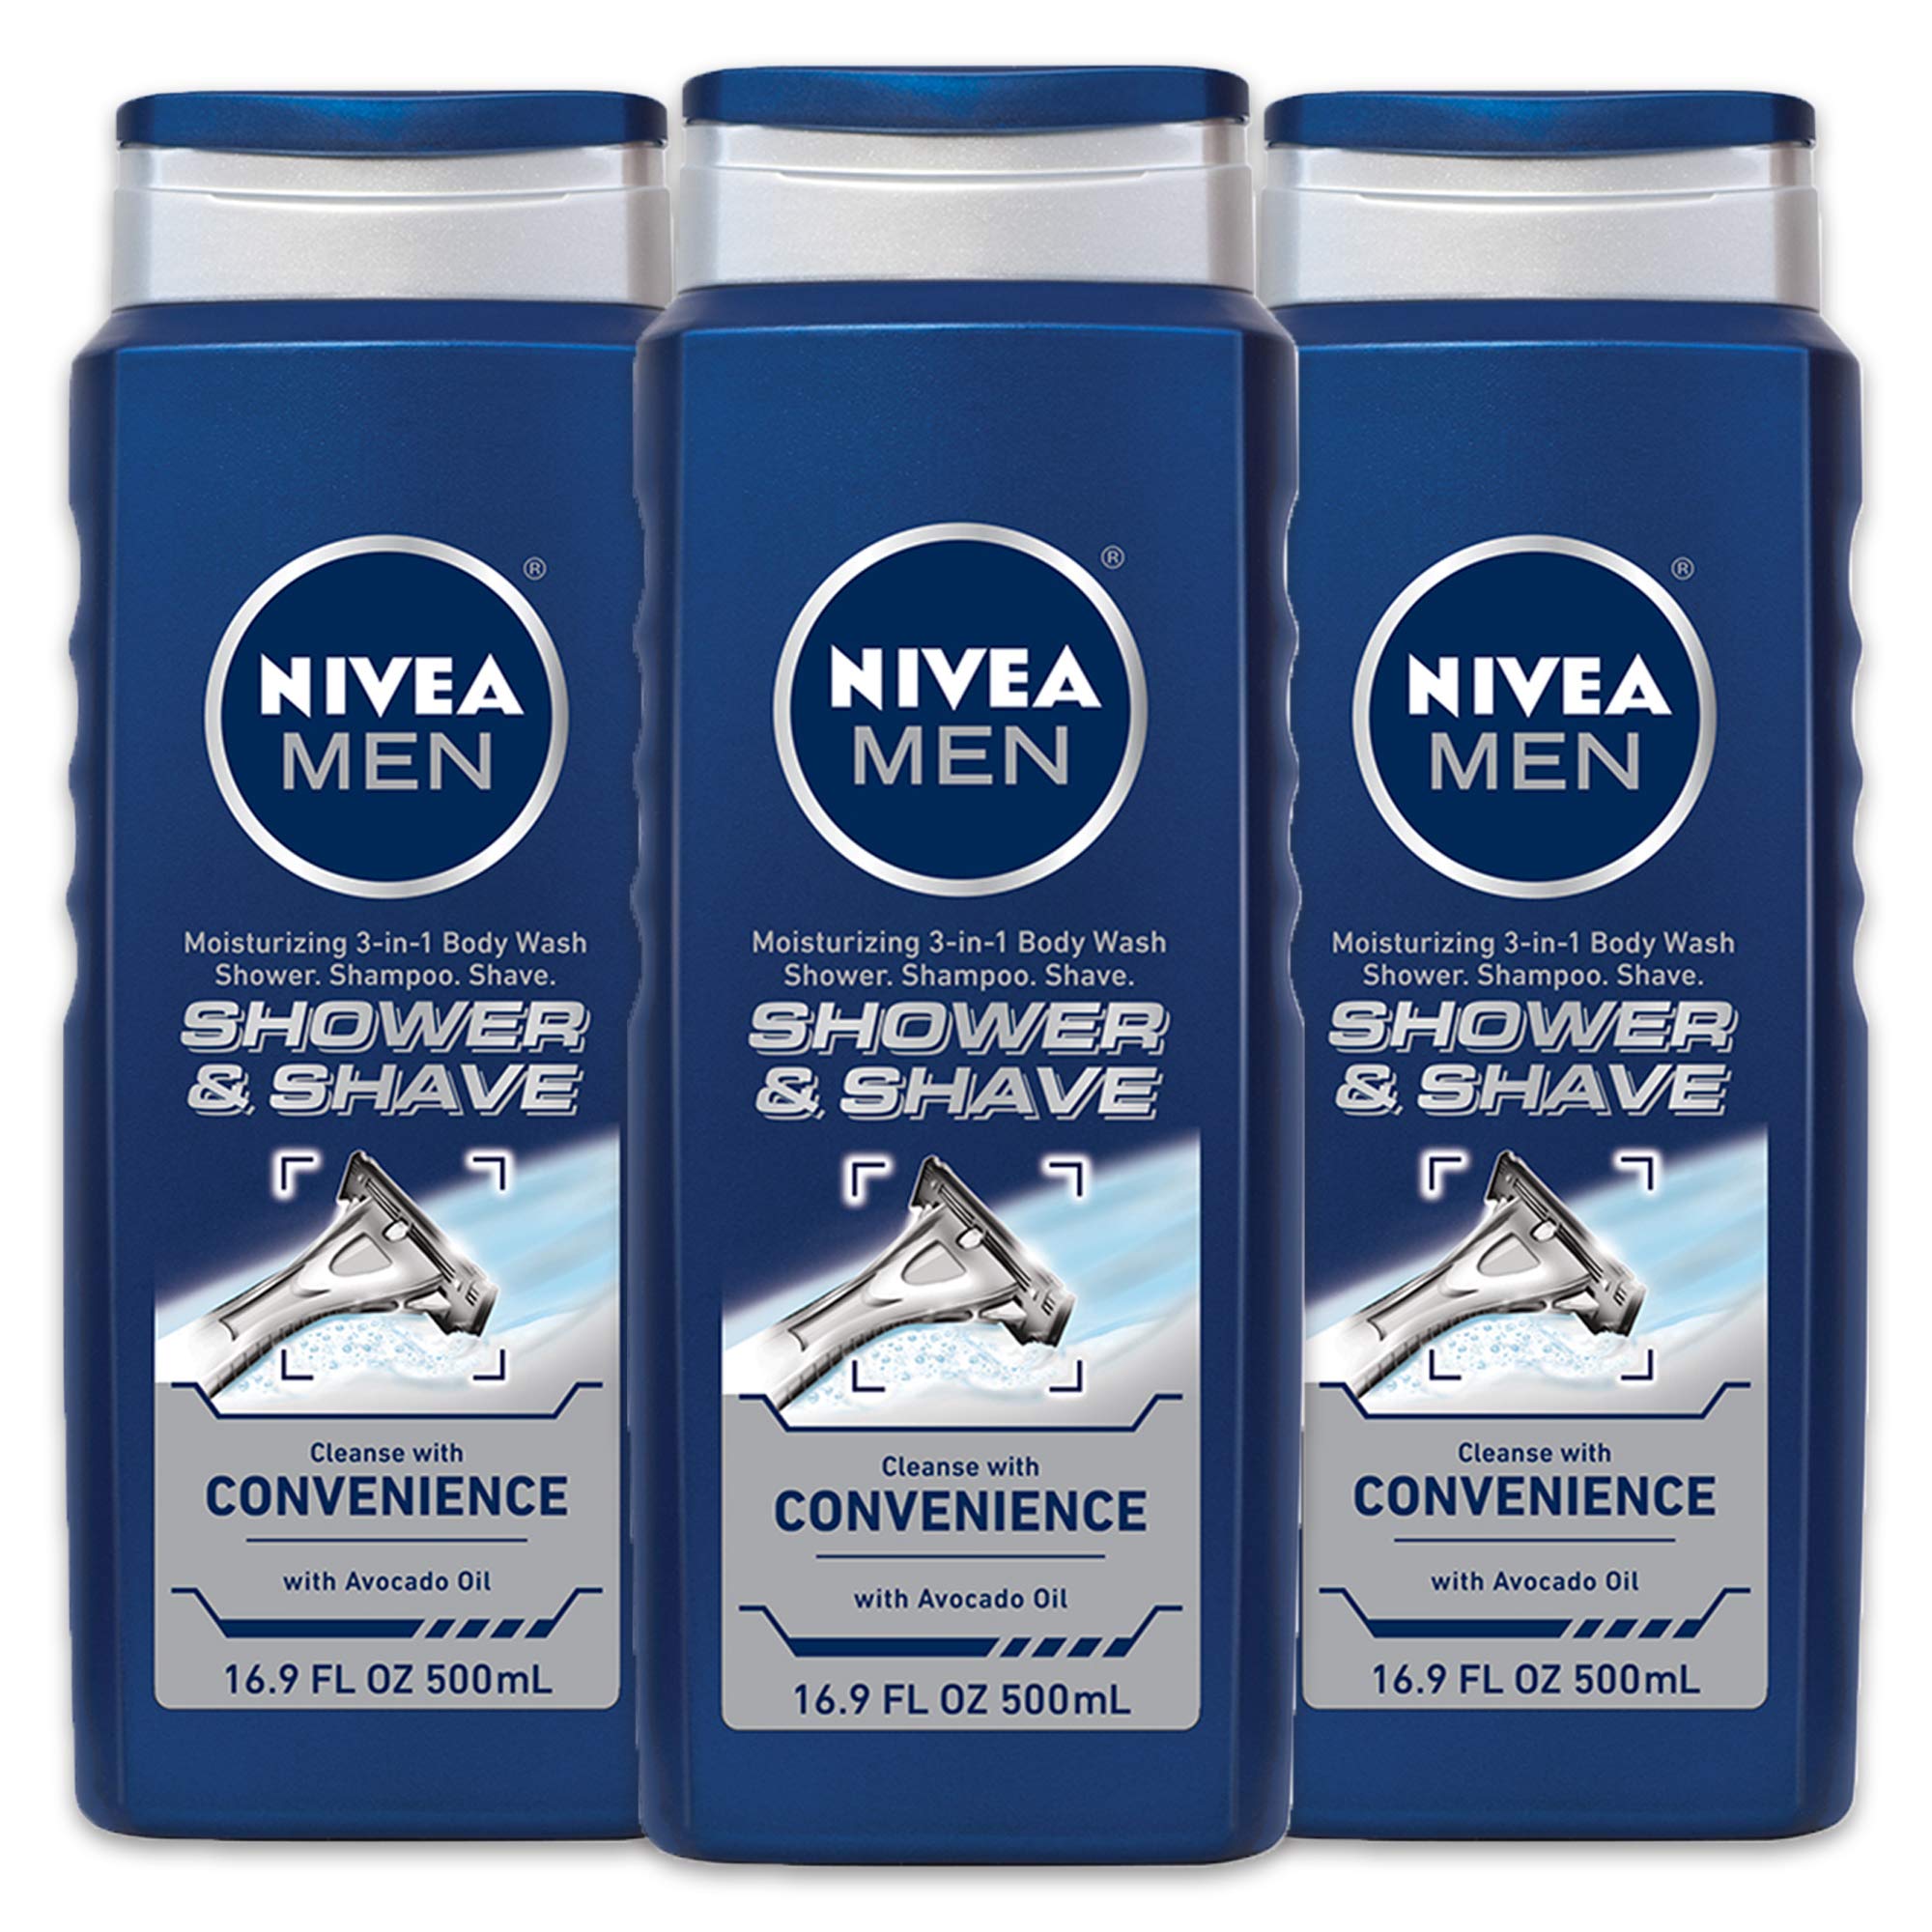 Nivea Men Shower & Shave Body Wash, Shower, Shave and Shampoo With Moisture, 16.9 fl. oz, Pack of 3